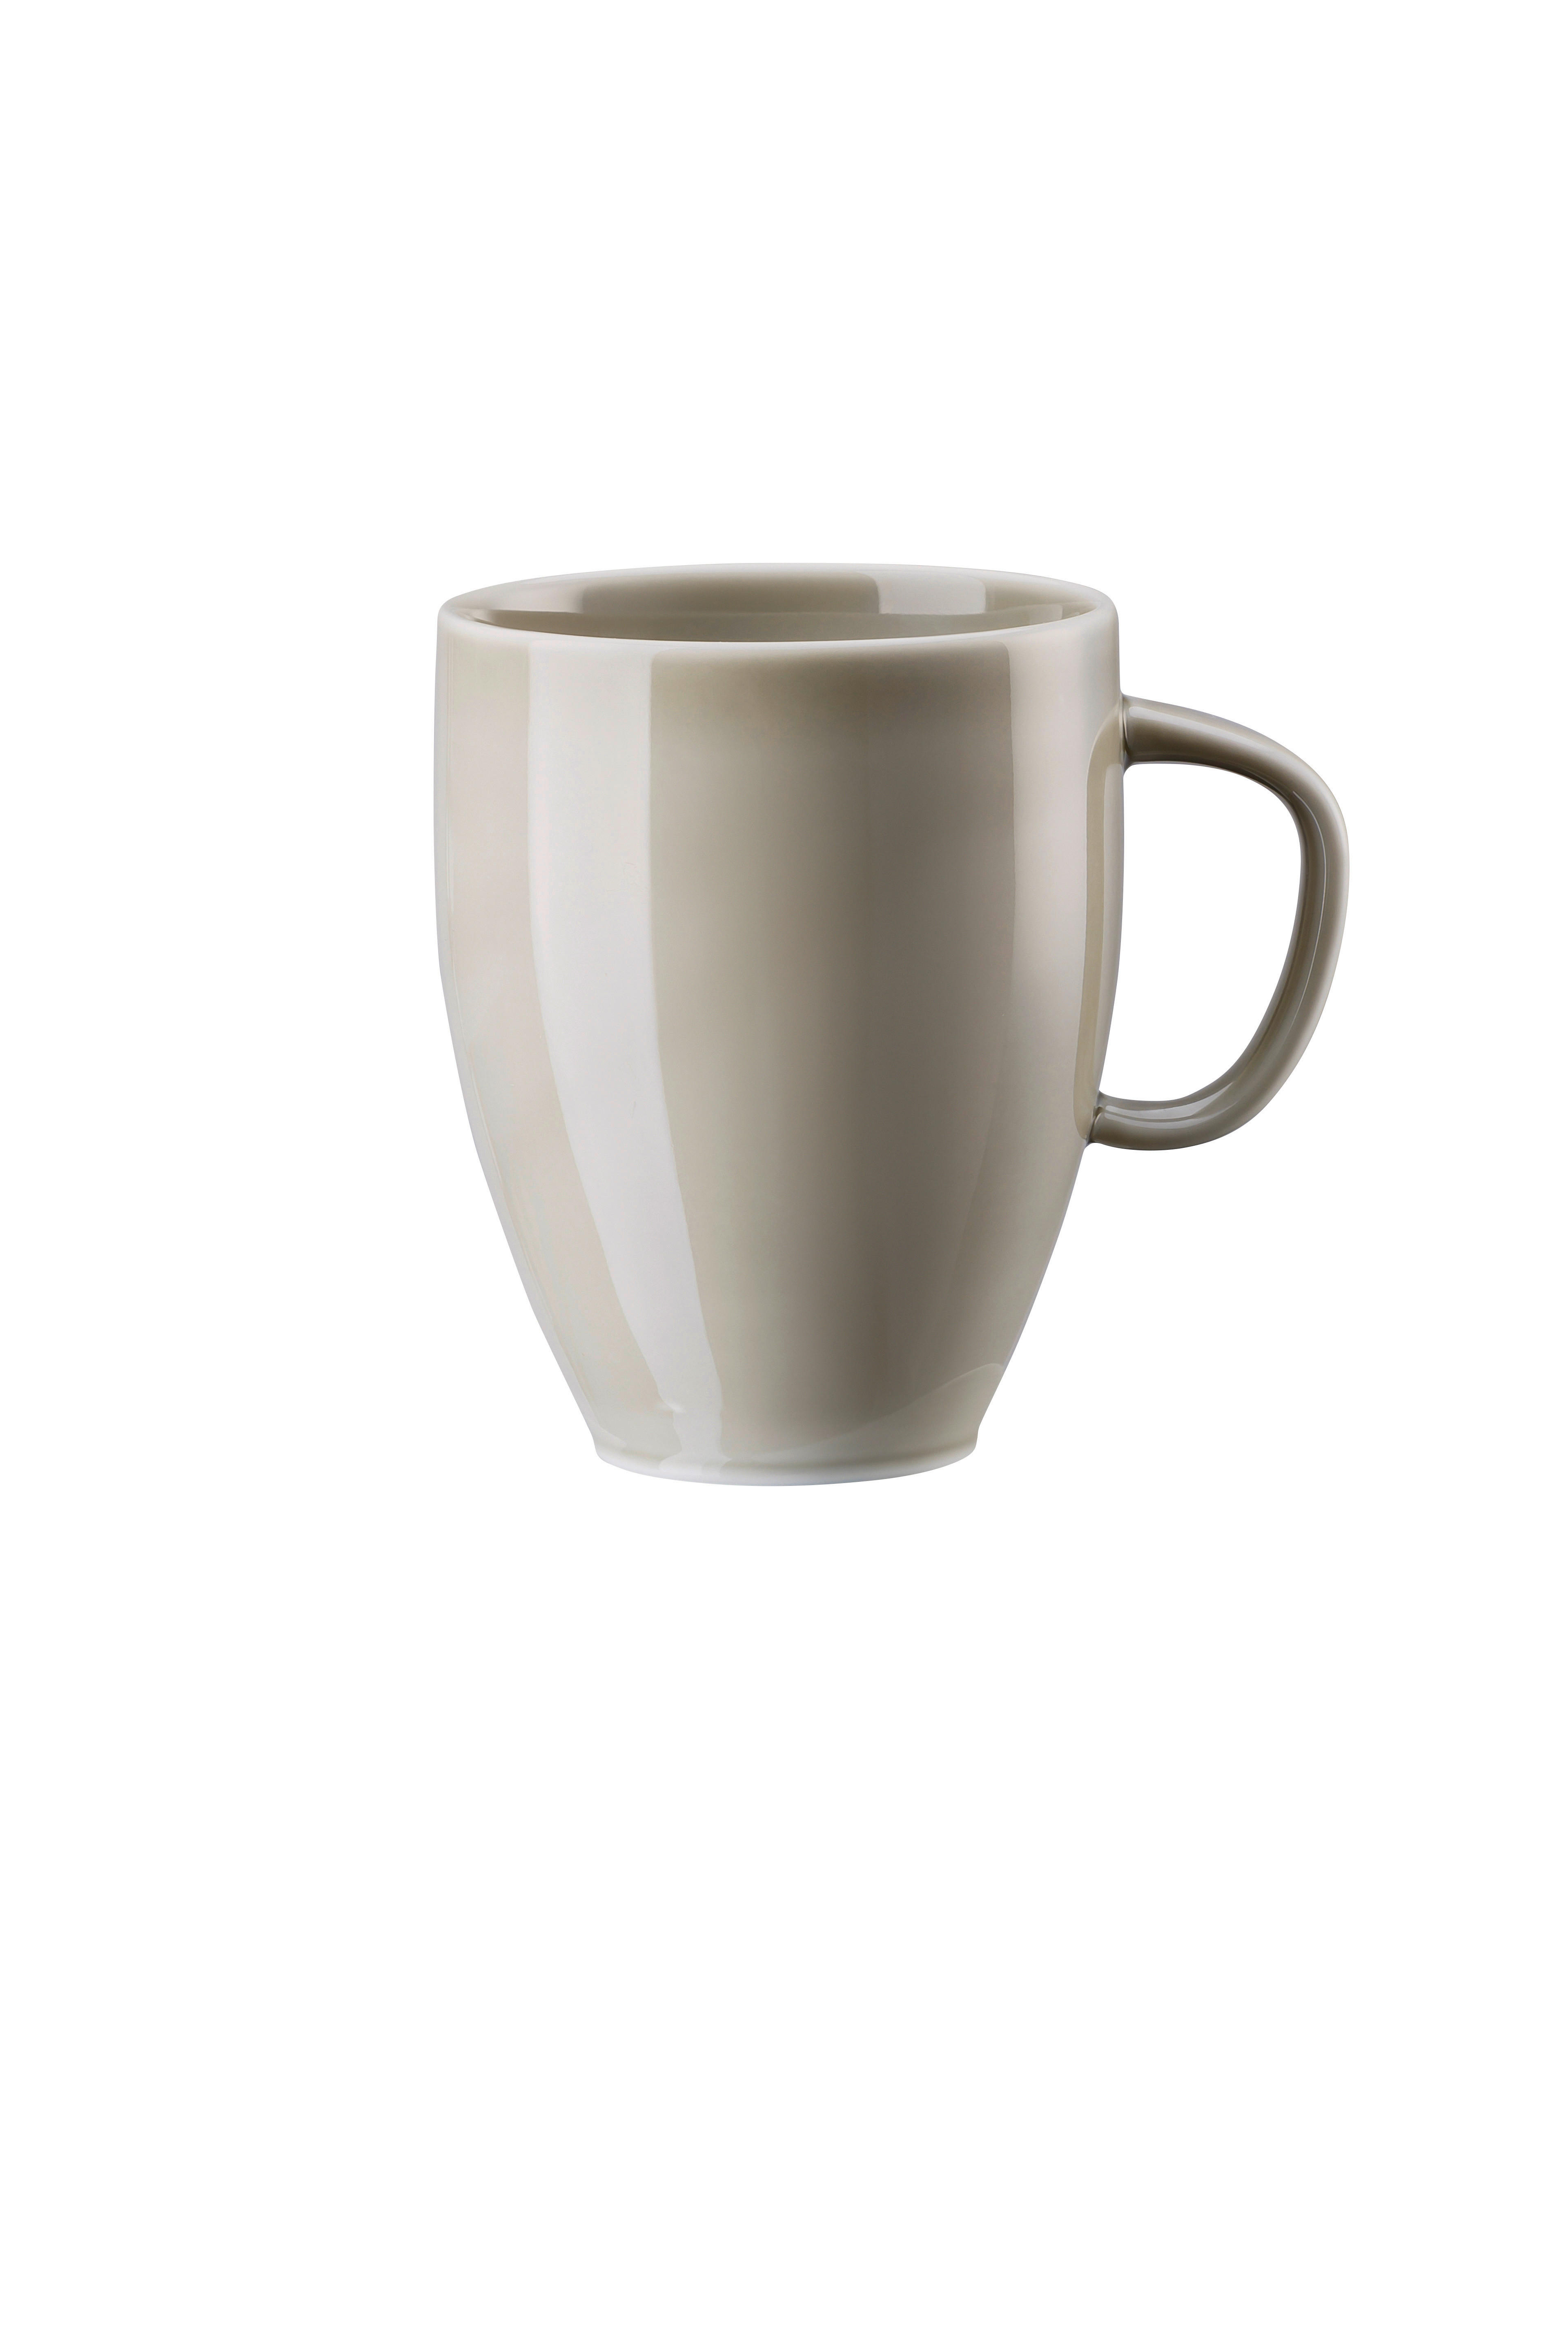 KAFFEEBECHER Junto Pearl Grey  380 ml   - Beige/Grau, LIFESTYLE, Keramik (0,38l) - Rosenthal